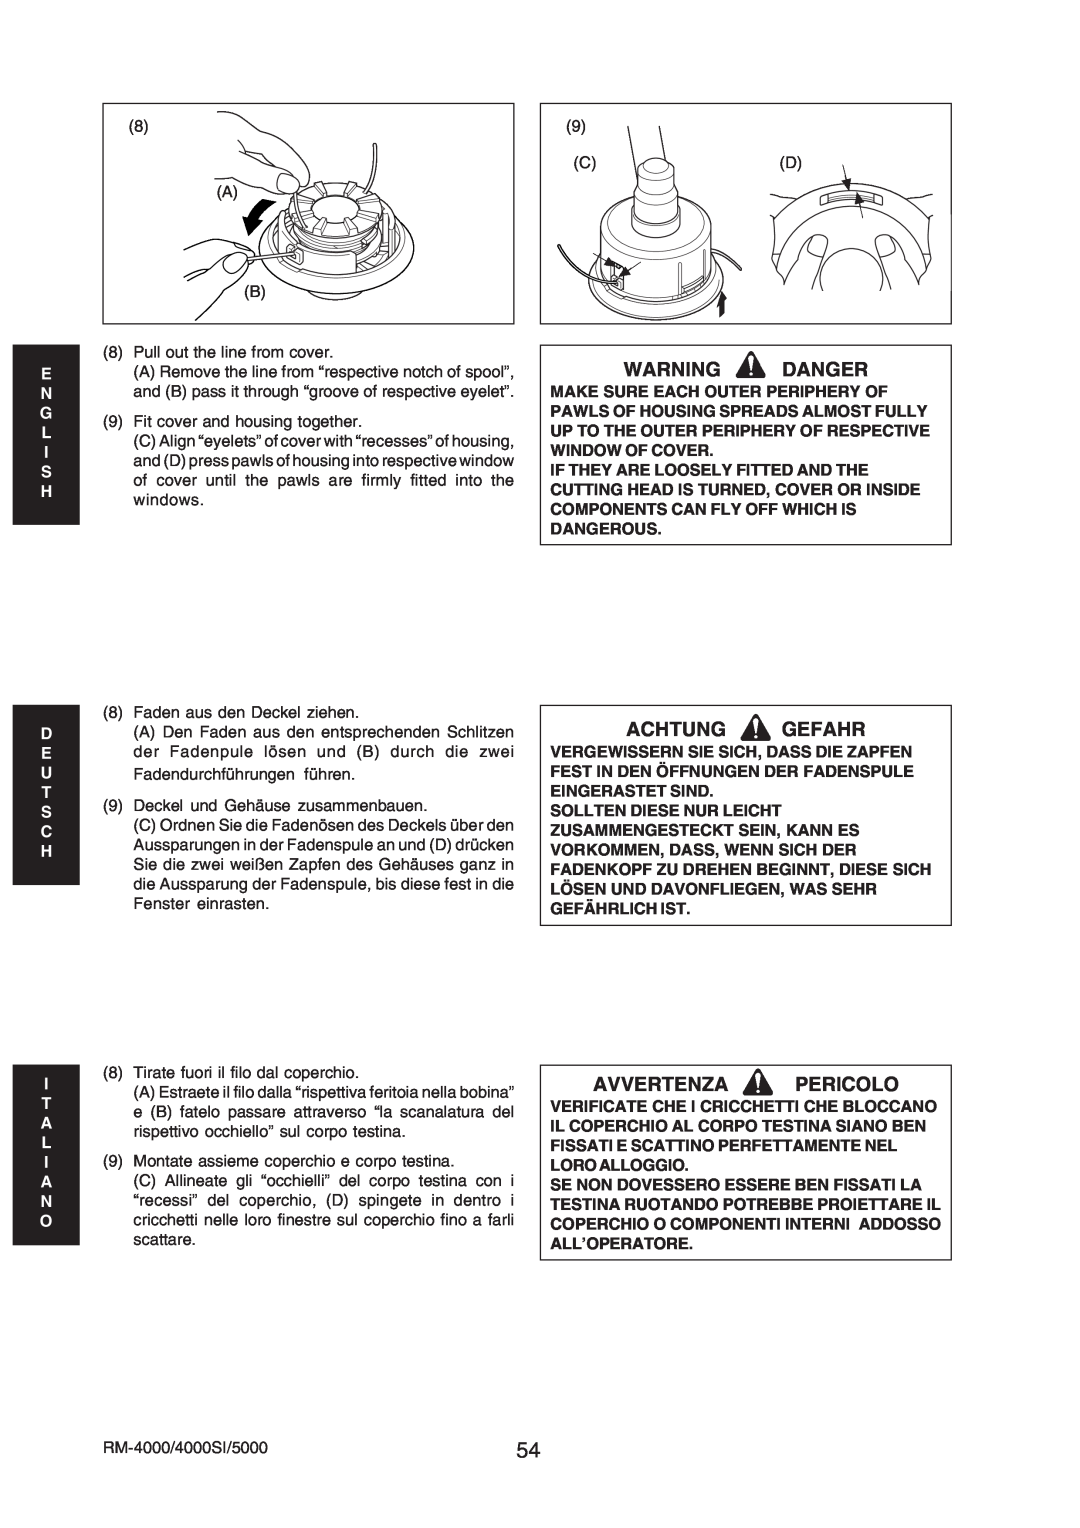 Echo RM-5000, RM-4000SI manual Warning Danger, Achtung Gefahr, Avvertenza Pericolo 